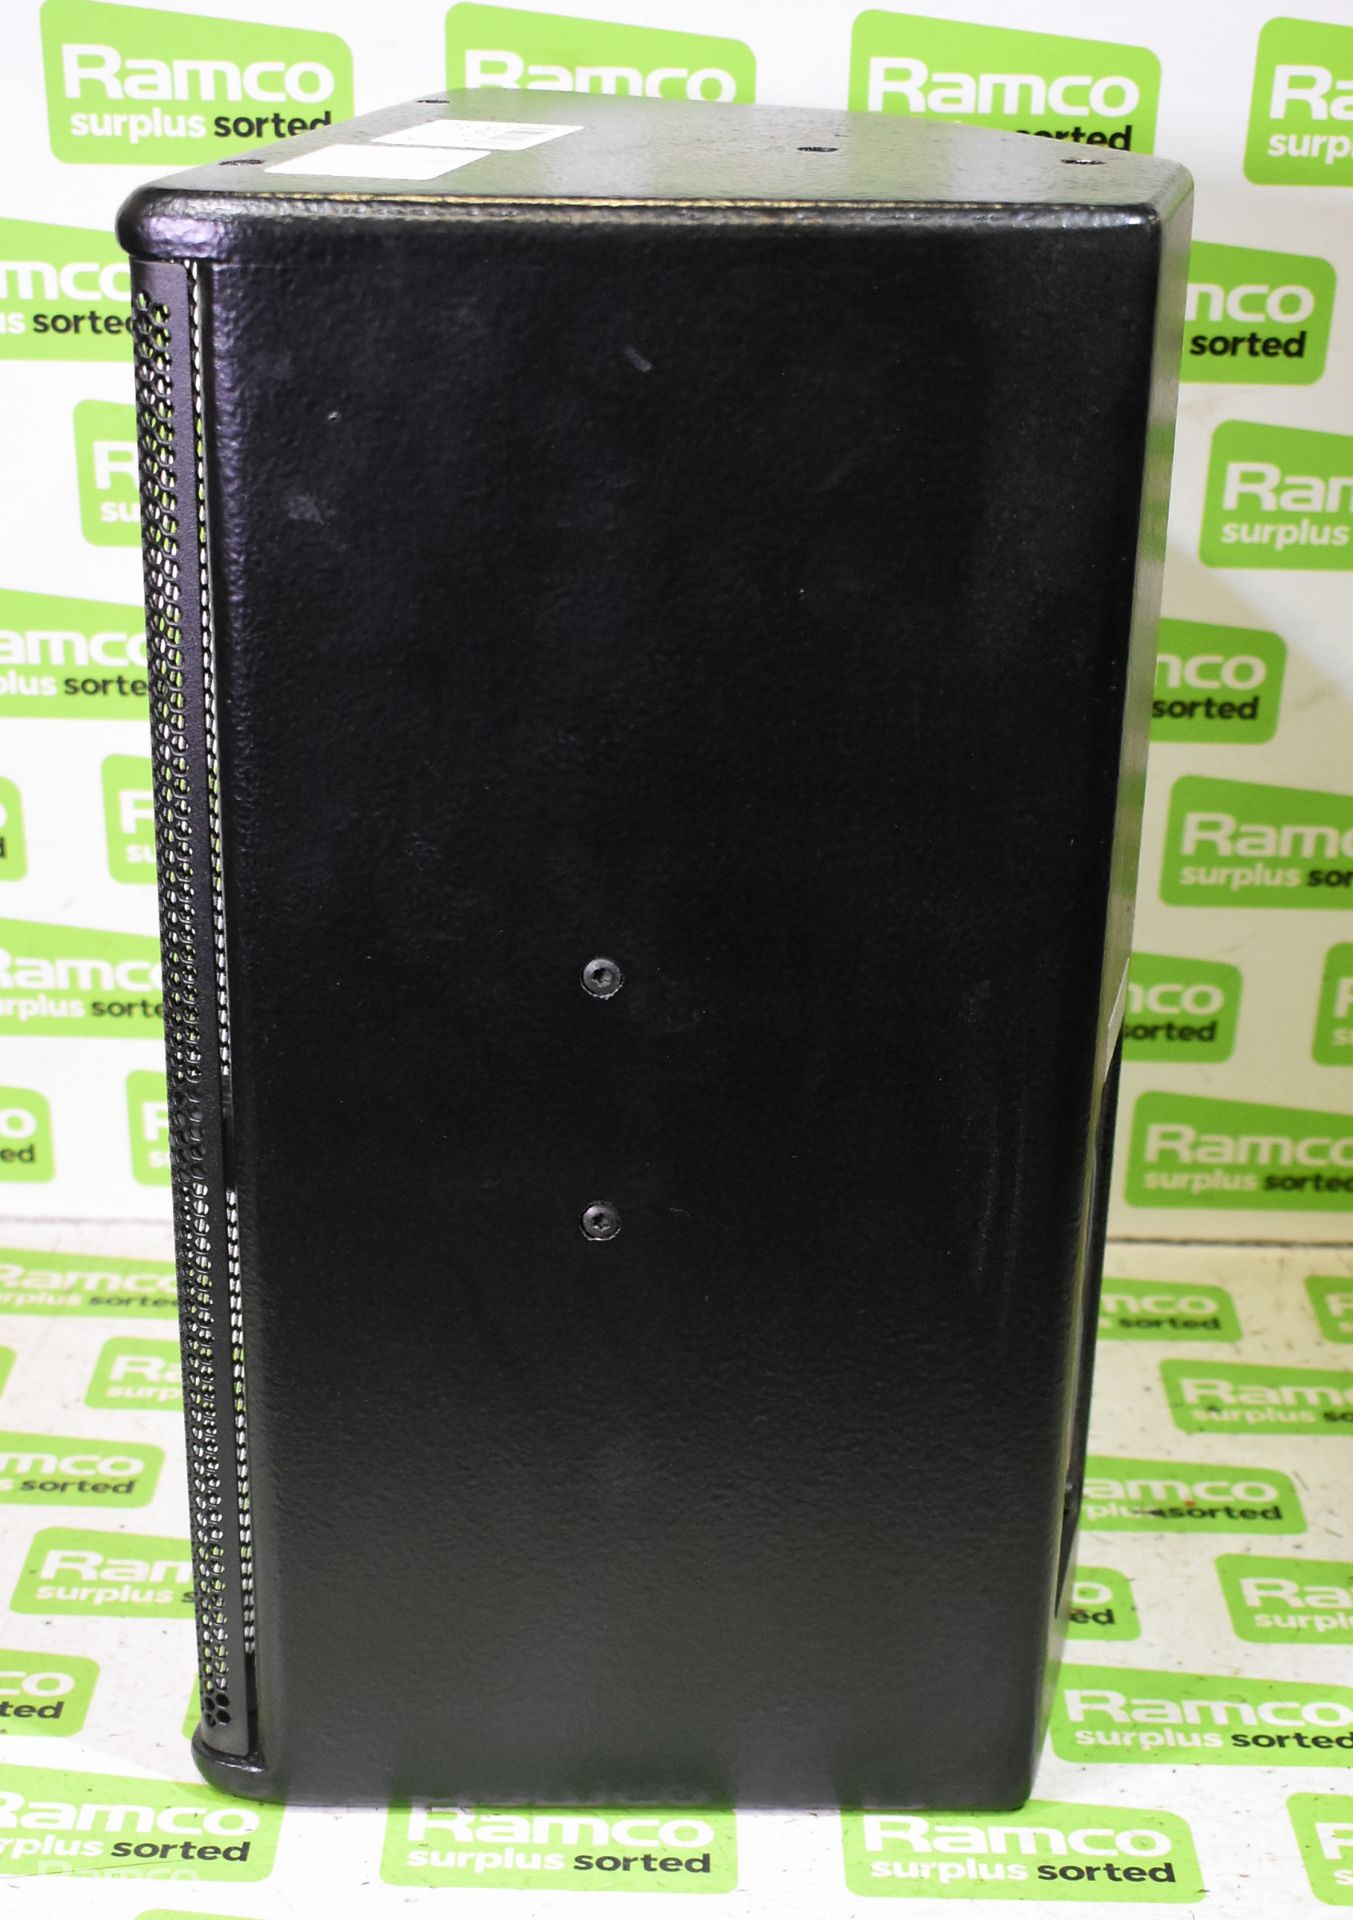 NEXO PS.8U - High power 2-way compact speaker - W 250 x D 220 x H 410 mm - Image 5 of 6